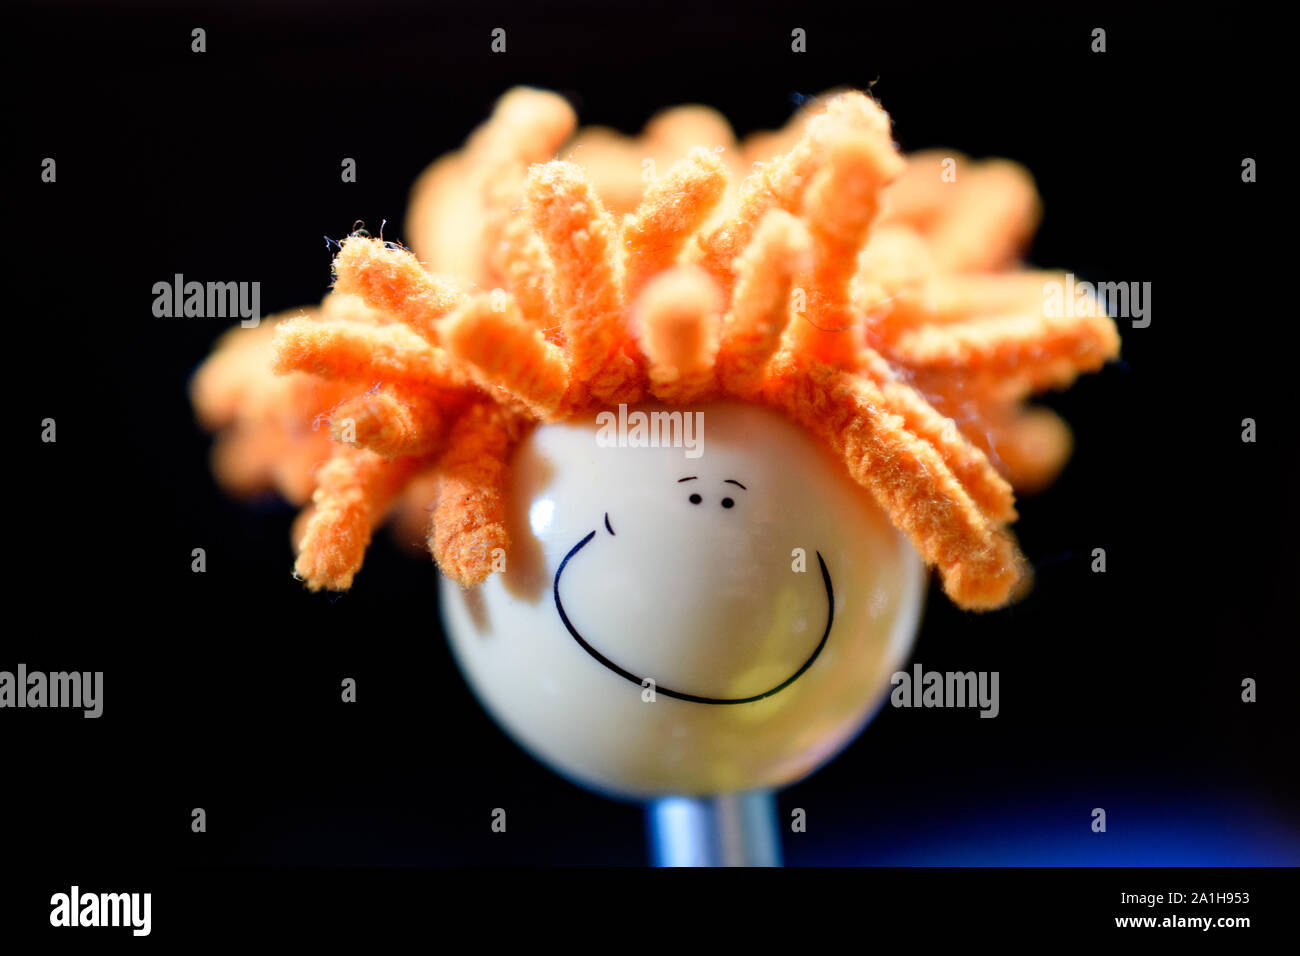 Closeup of Adorable Novelty Pen Top Smiley Face with Orange Yarn Dreadlocks Stock Photo